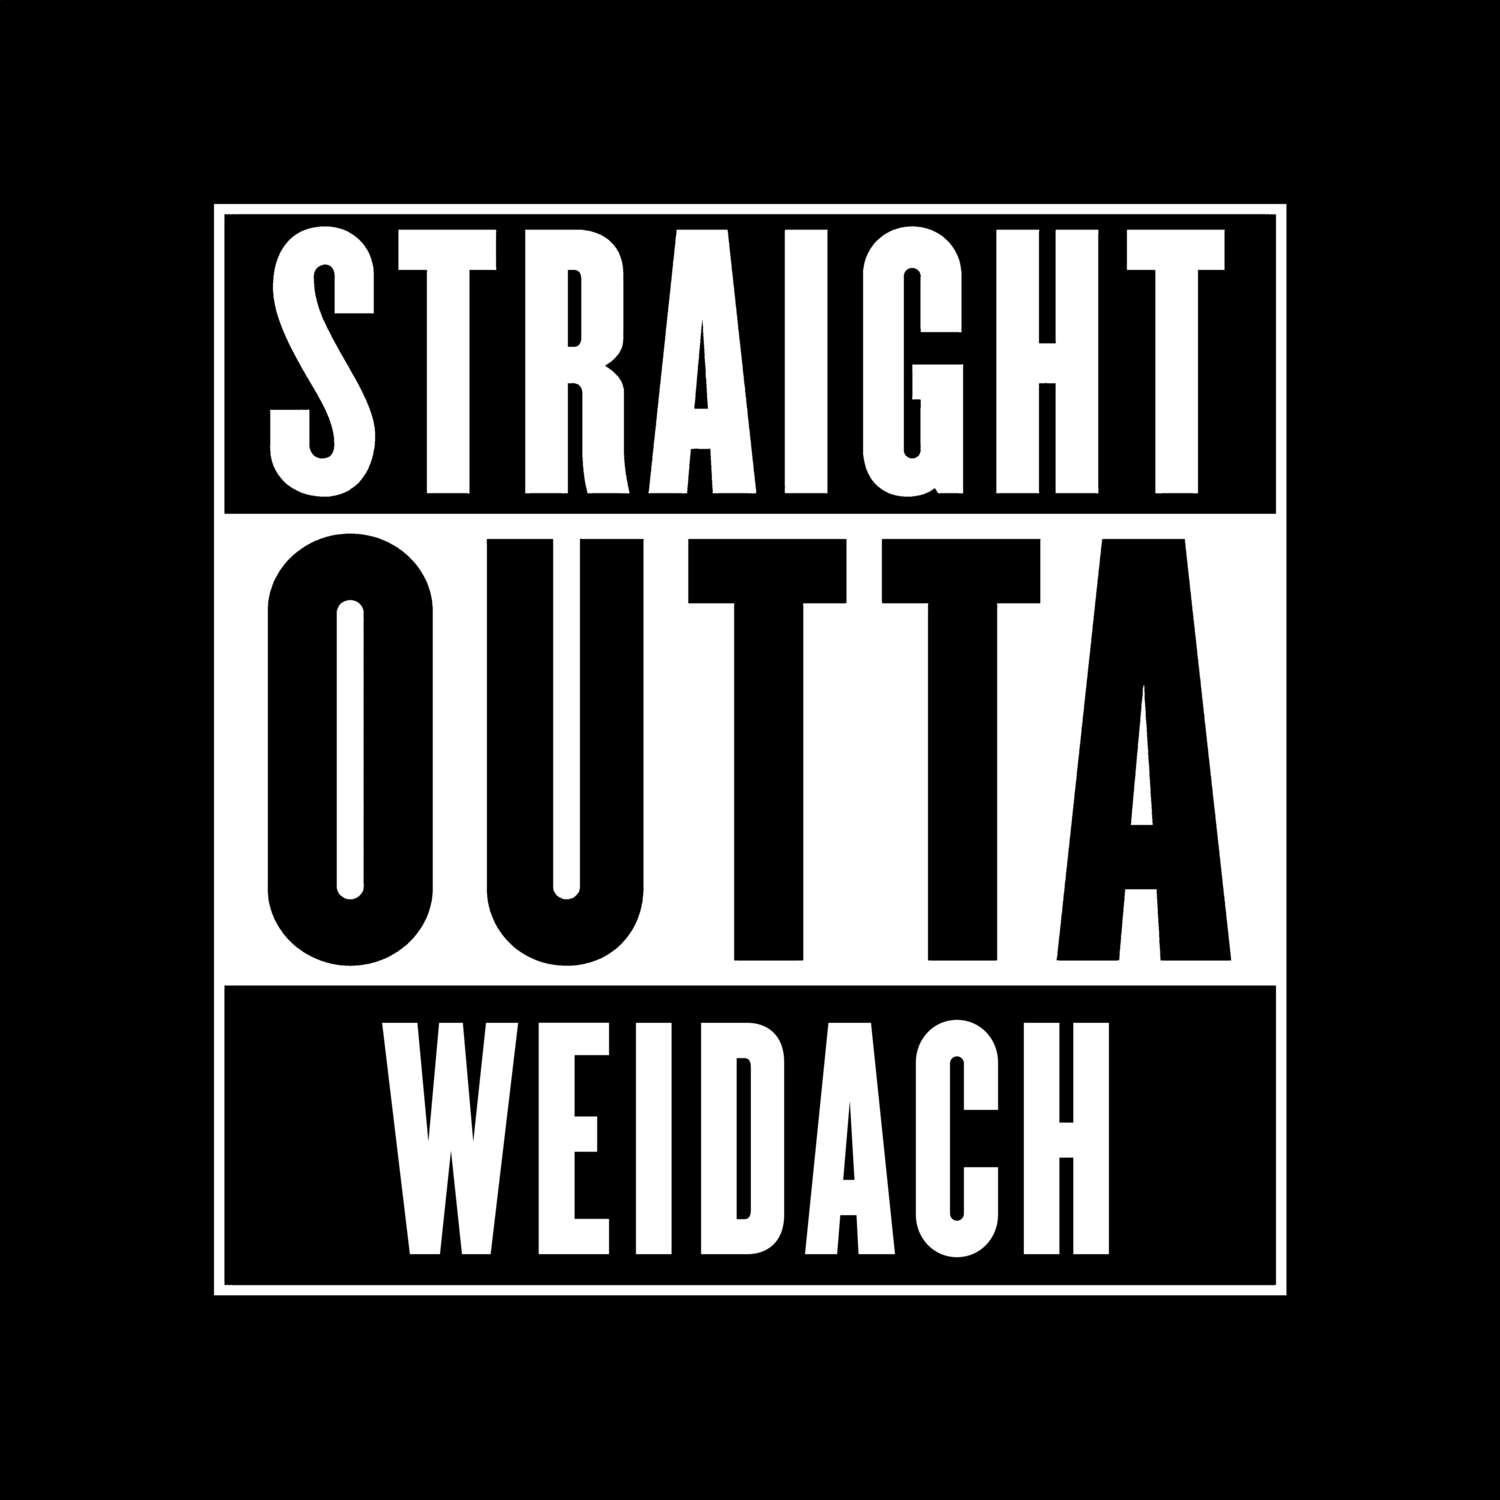 Weidach T-Shirt »Straight Outta«